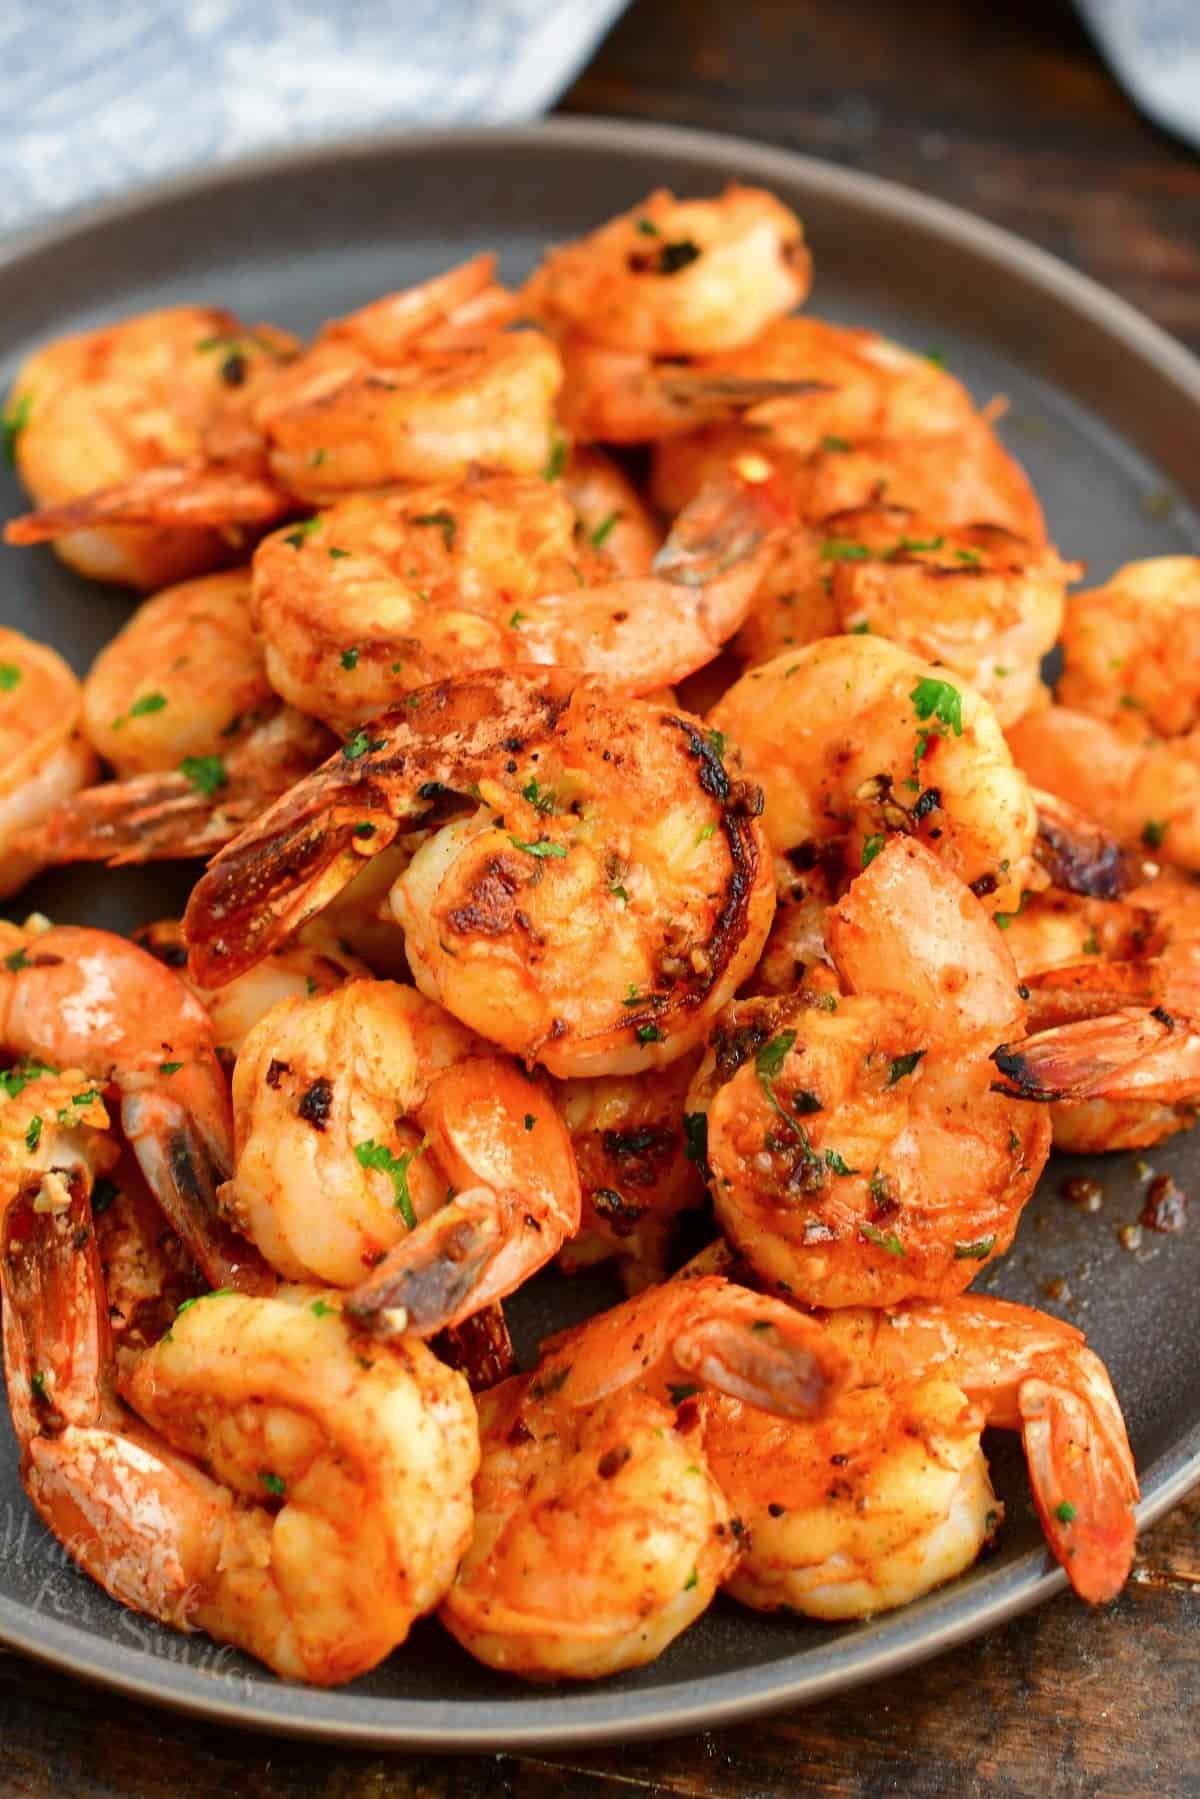 Sauteed Shrimp Recipe